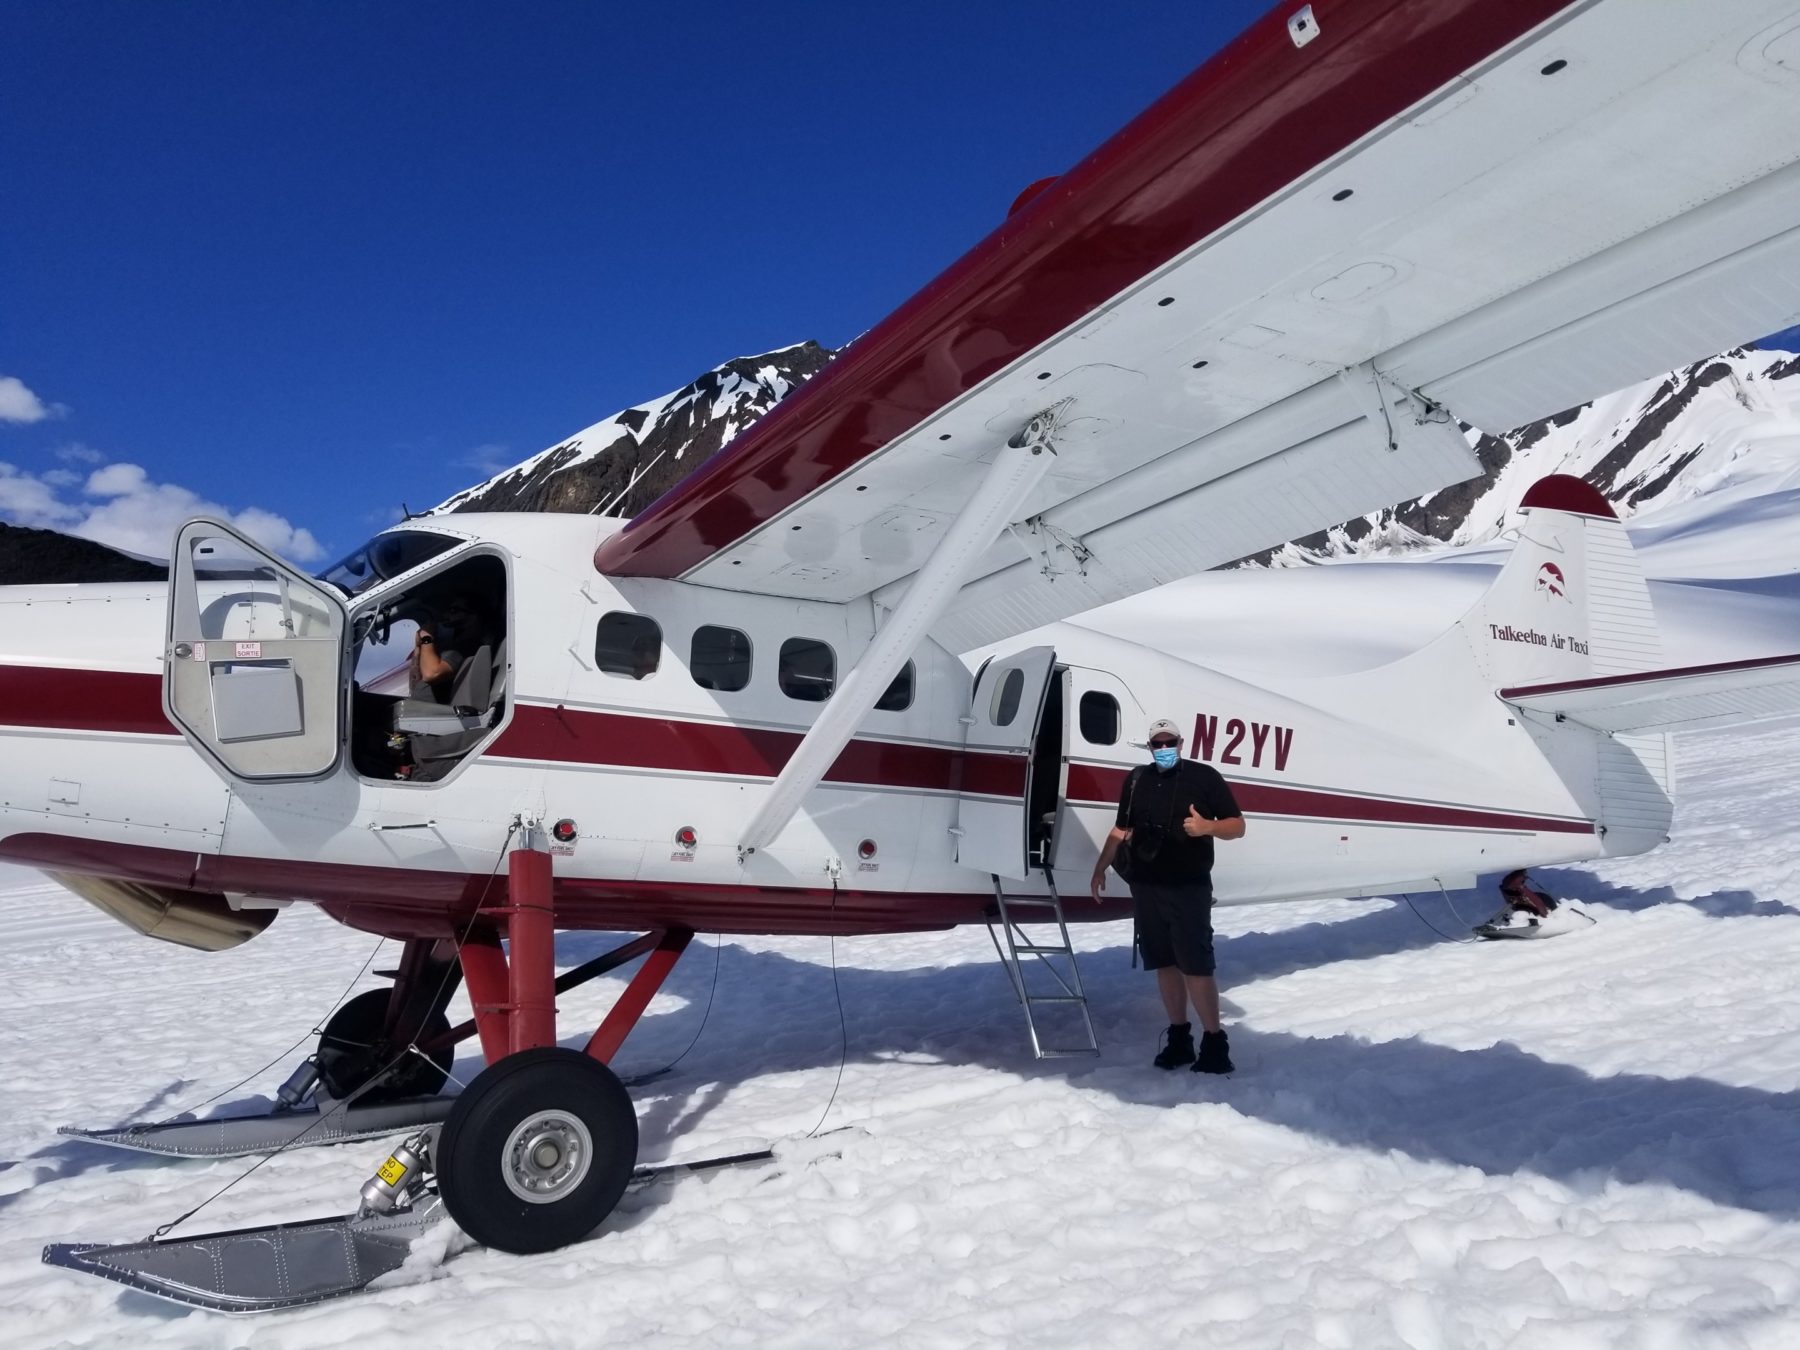 Things to do in Fairbanks Alaska - flight to Denali